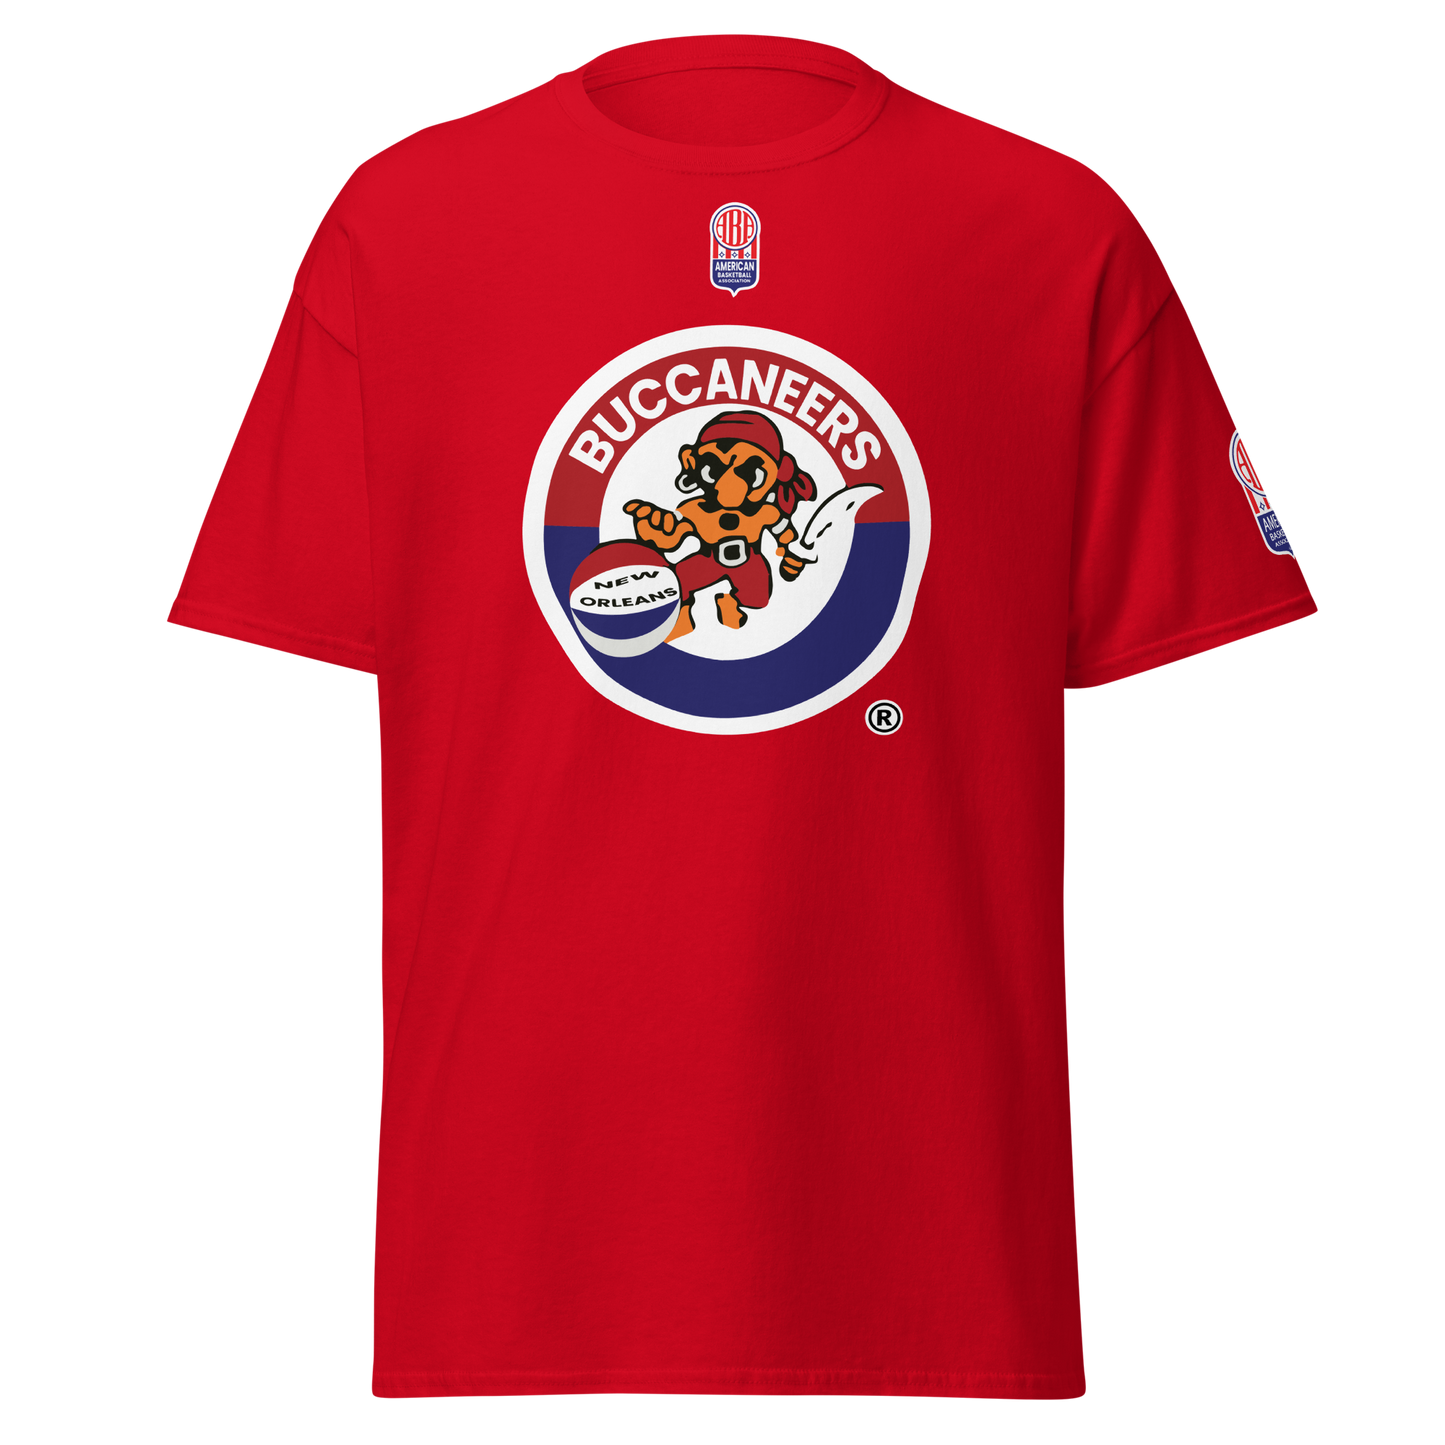 New Orleans Buccaneers Oldschool ABA Retro T-Shirt! 🏀